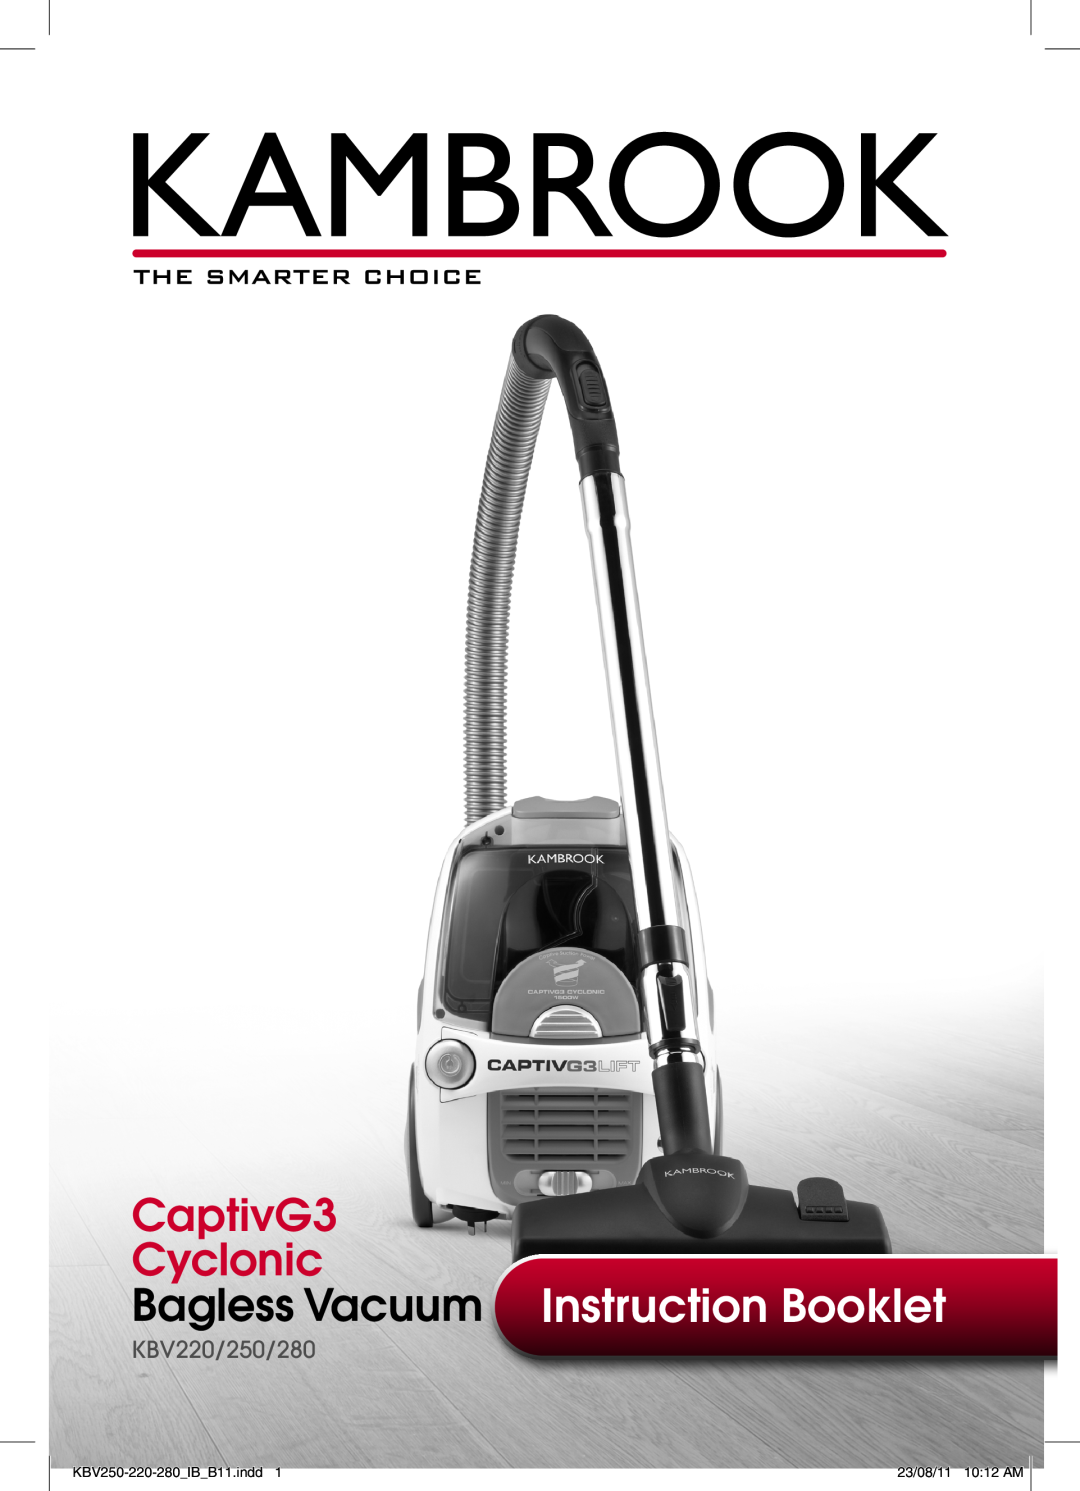 Kambrook KBV280 manual Bagless Vacuum Instruction Booklet, CaptivG3 Cyclonic, KBV220/250/280, KBV250-220-280 IB B11.indd1 